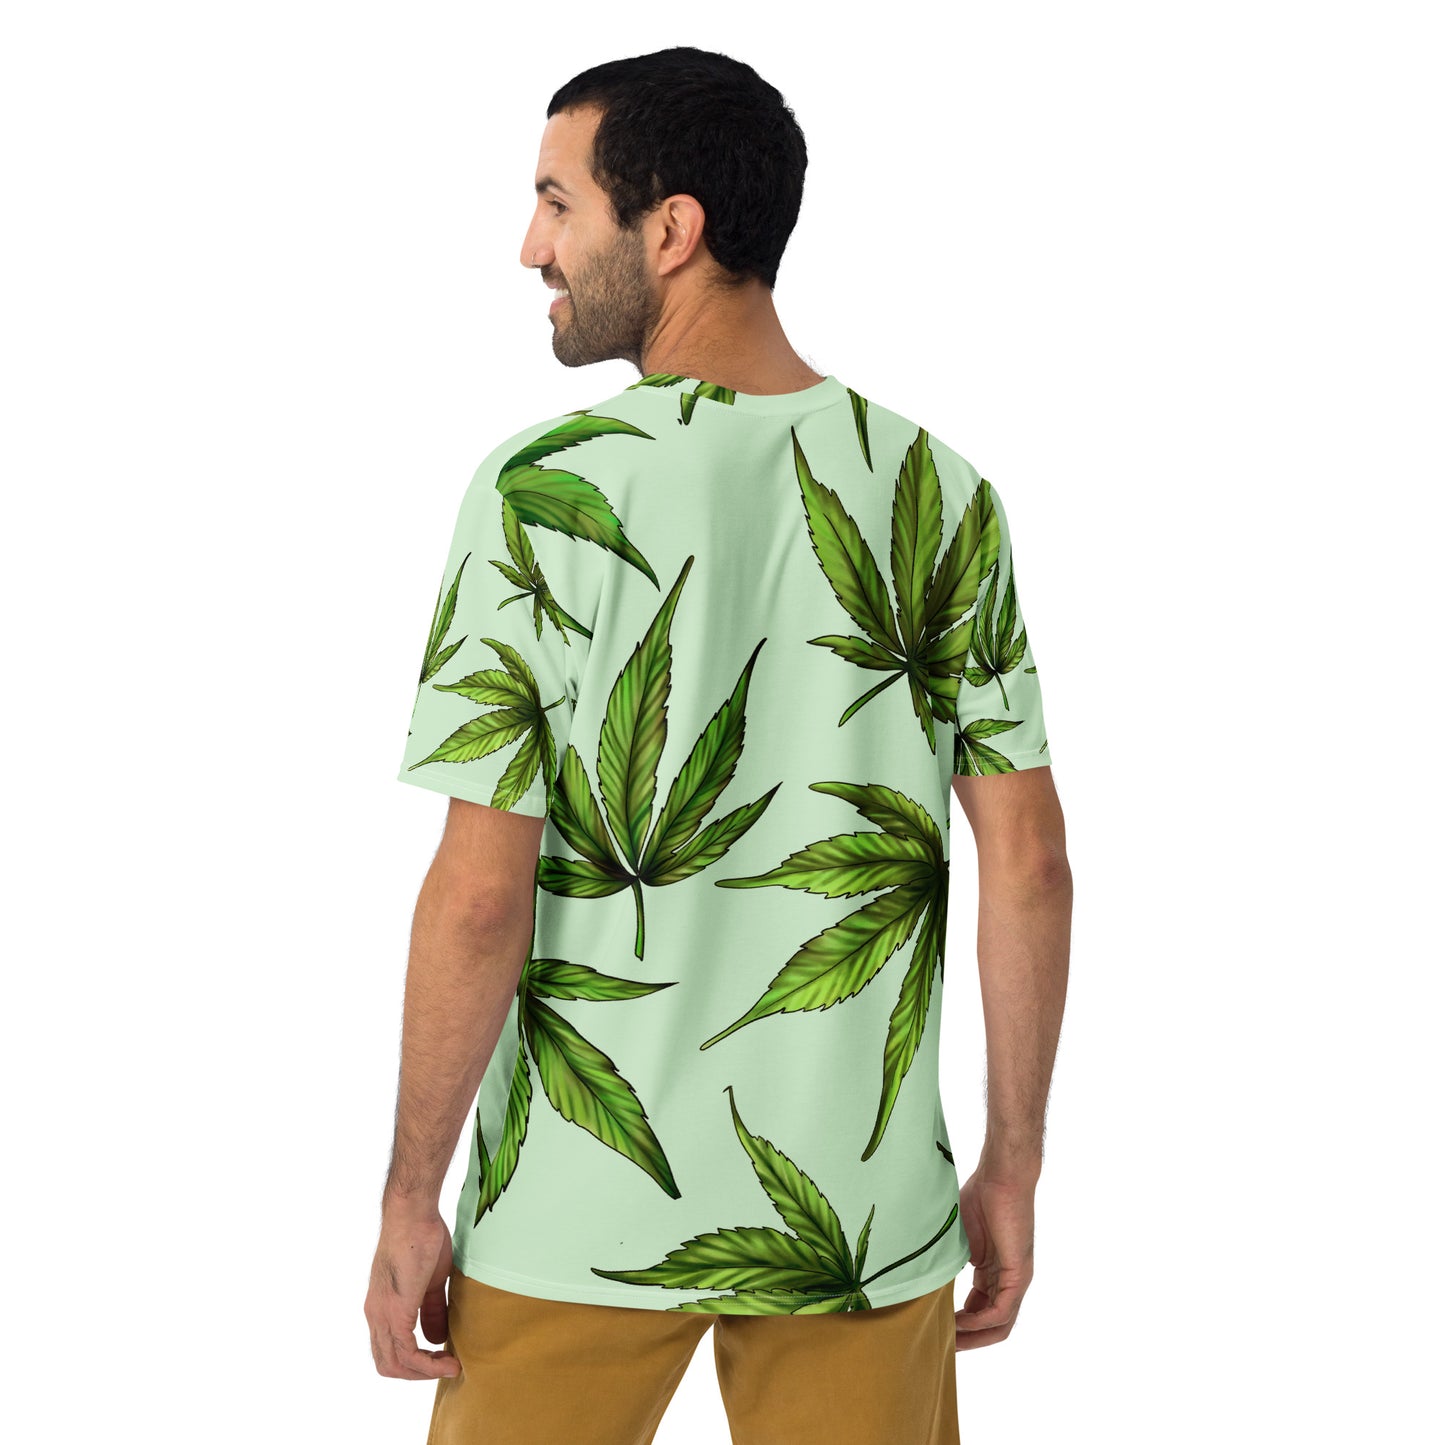 Herren-T-Shirt - Palme grün